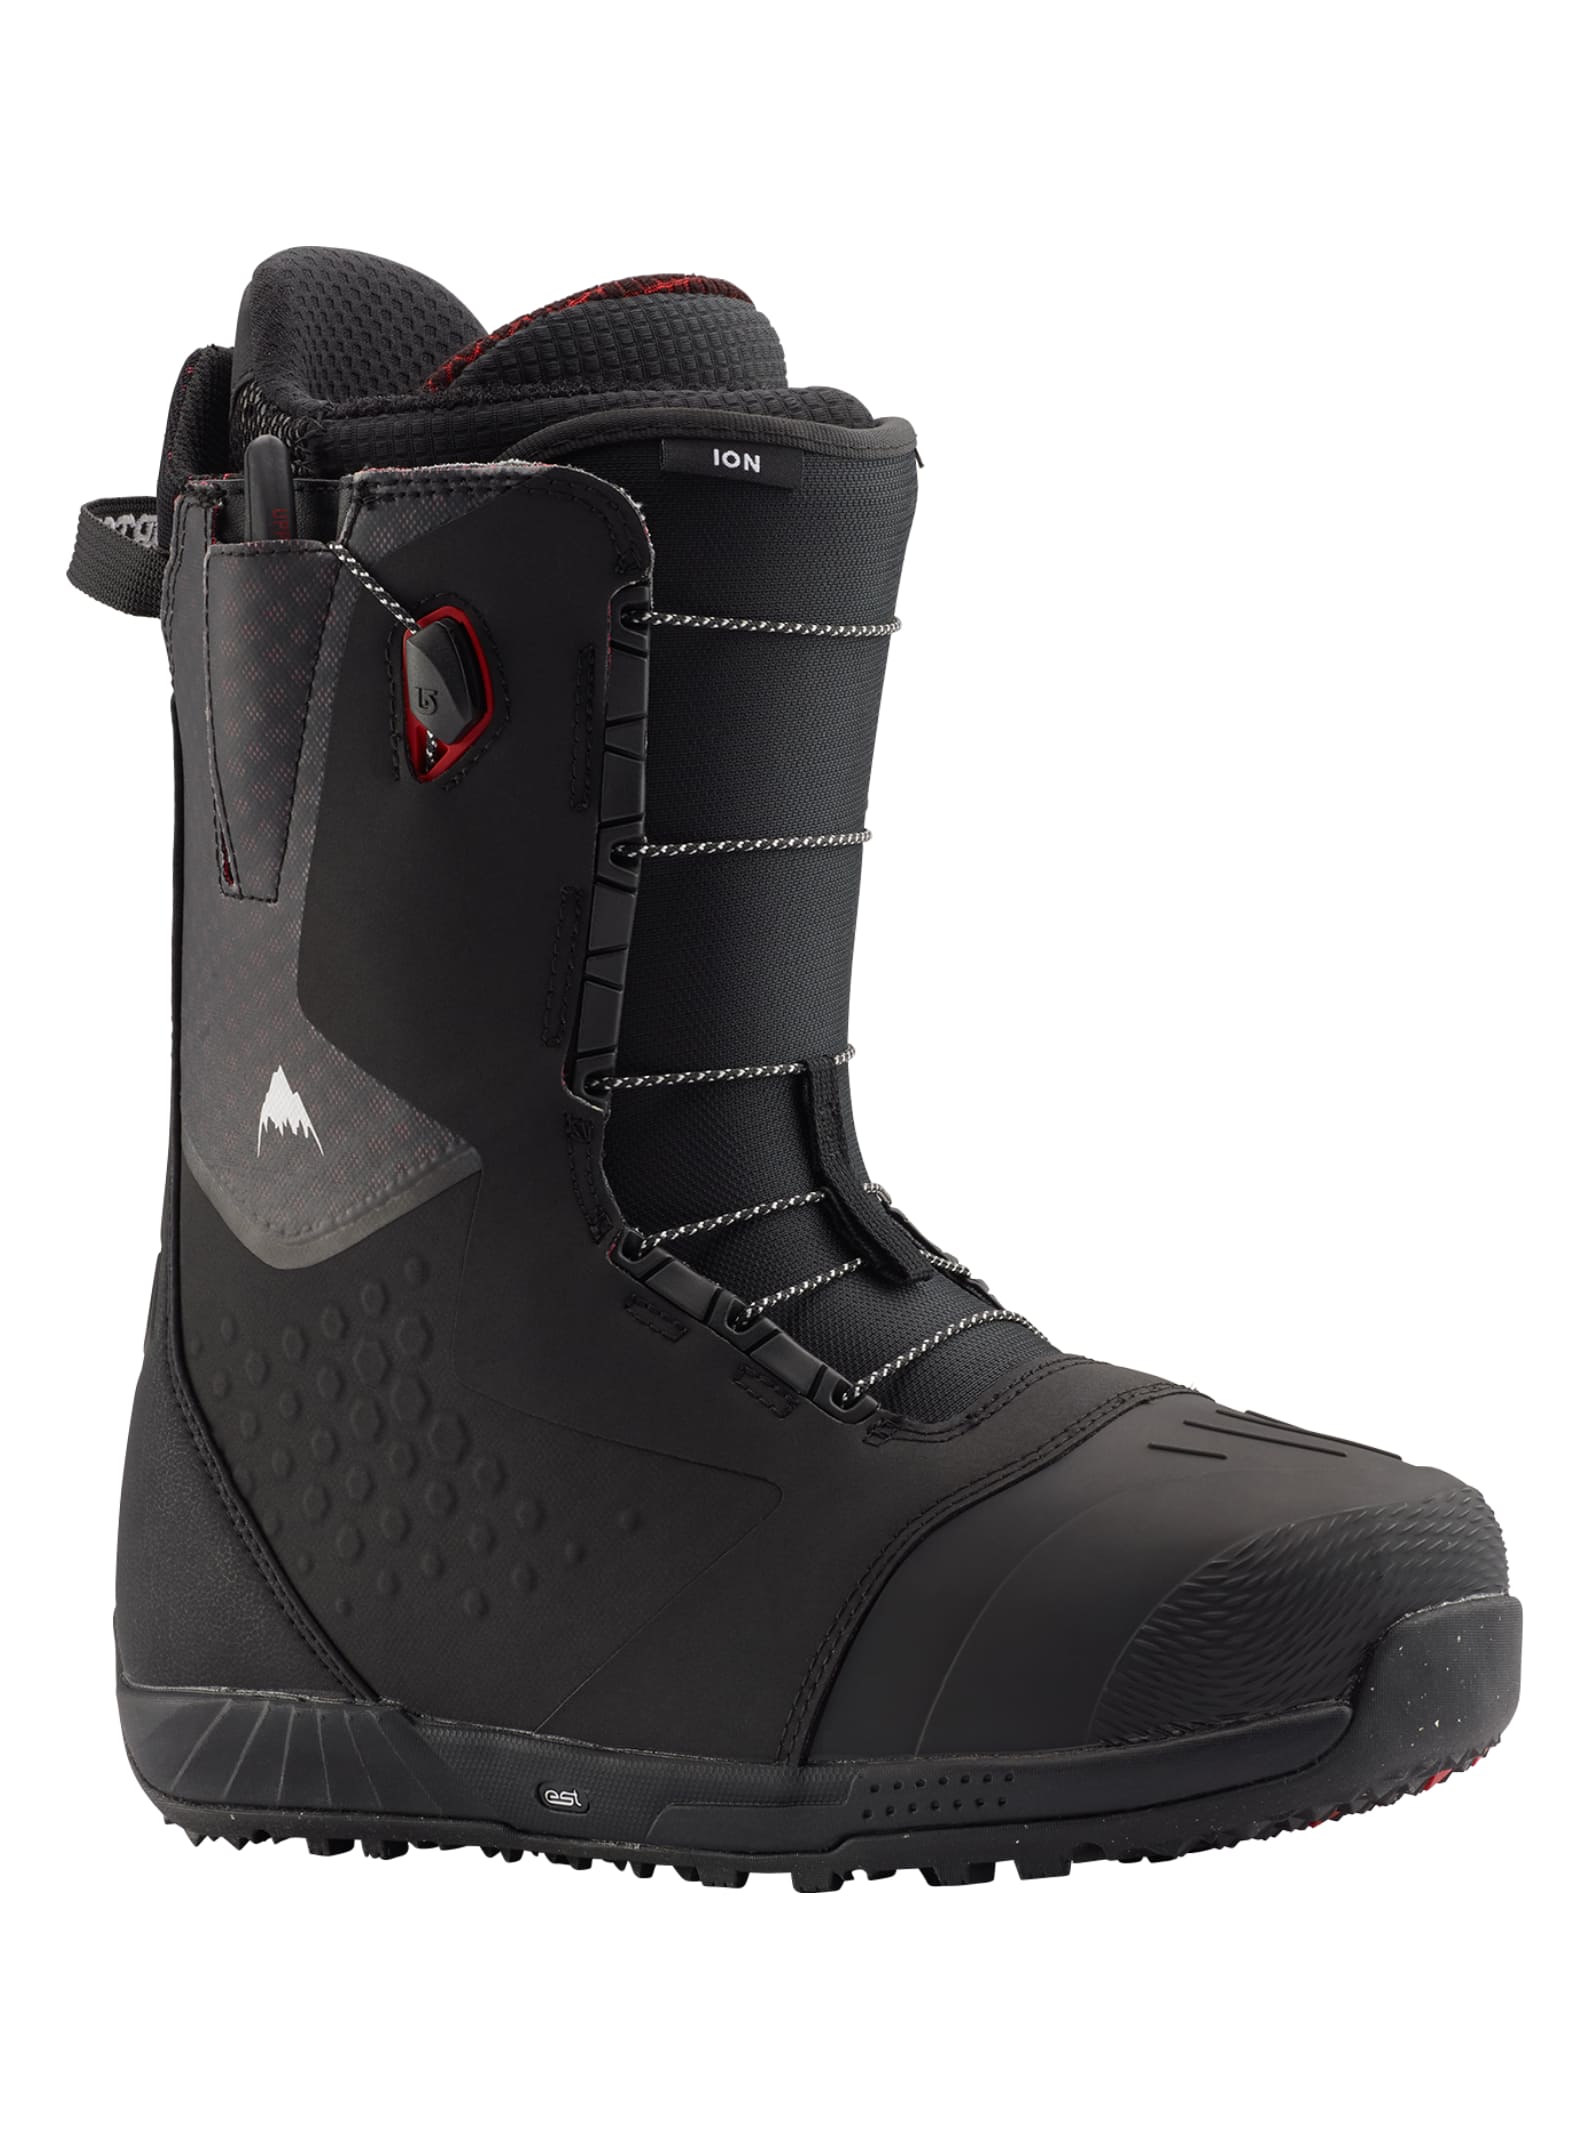 Burton - Boots de snowboard Ion homme, Black / Red, 10